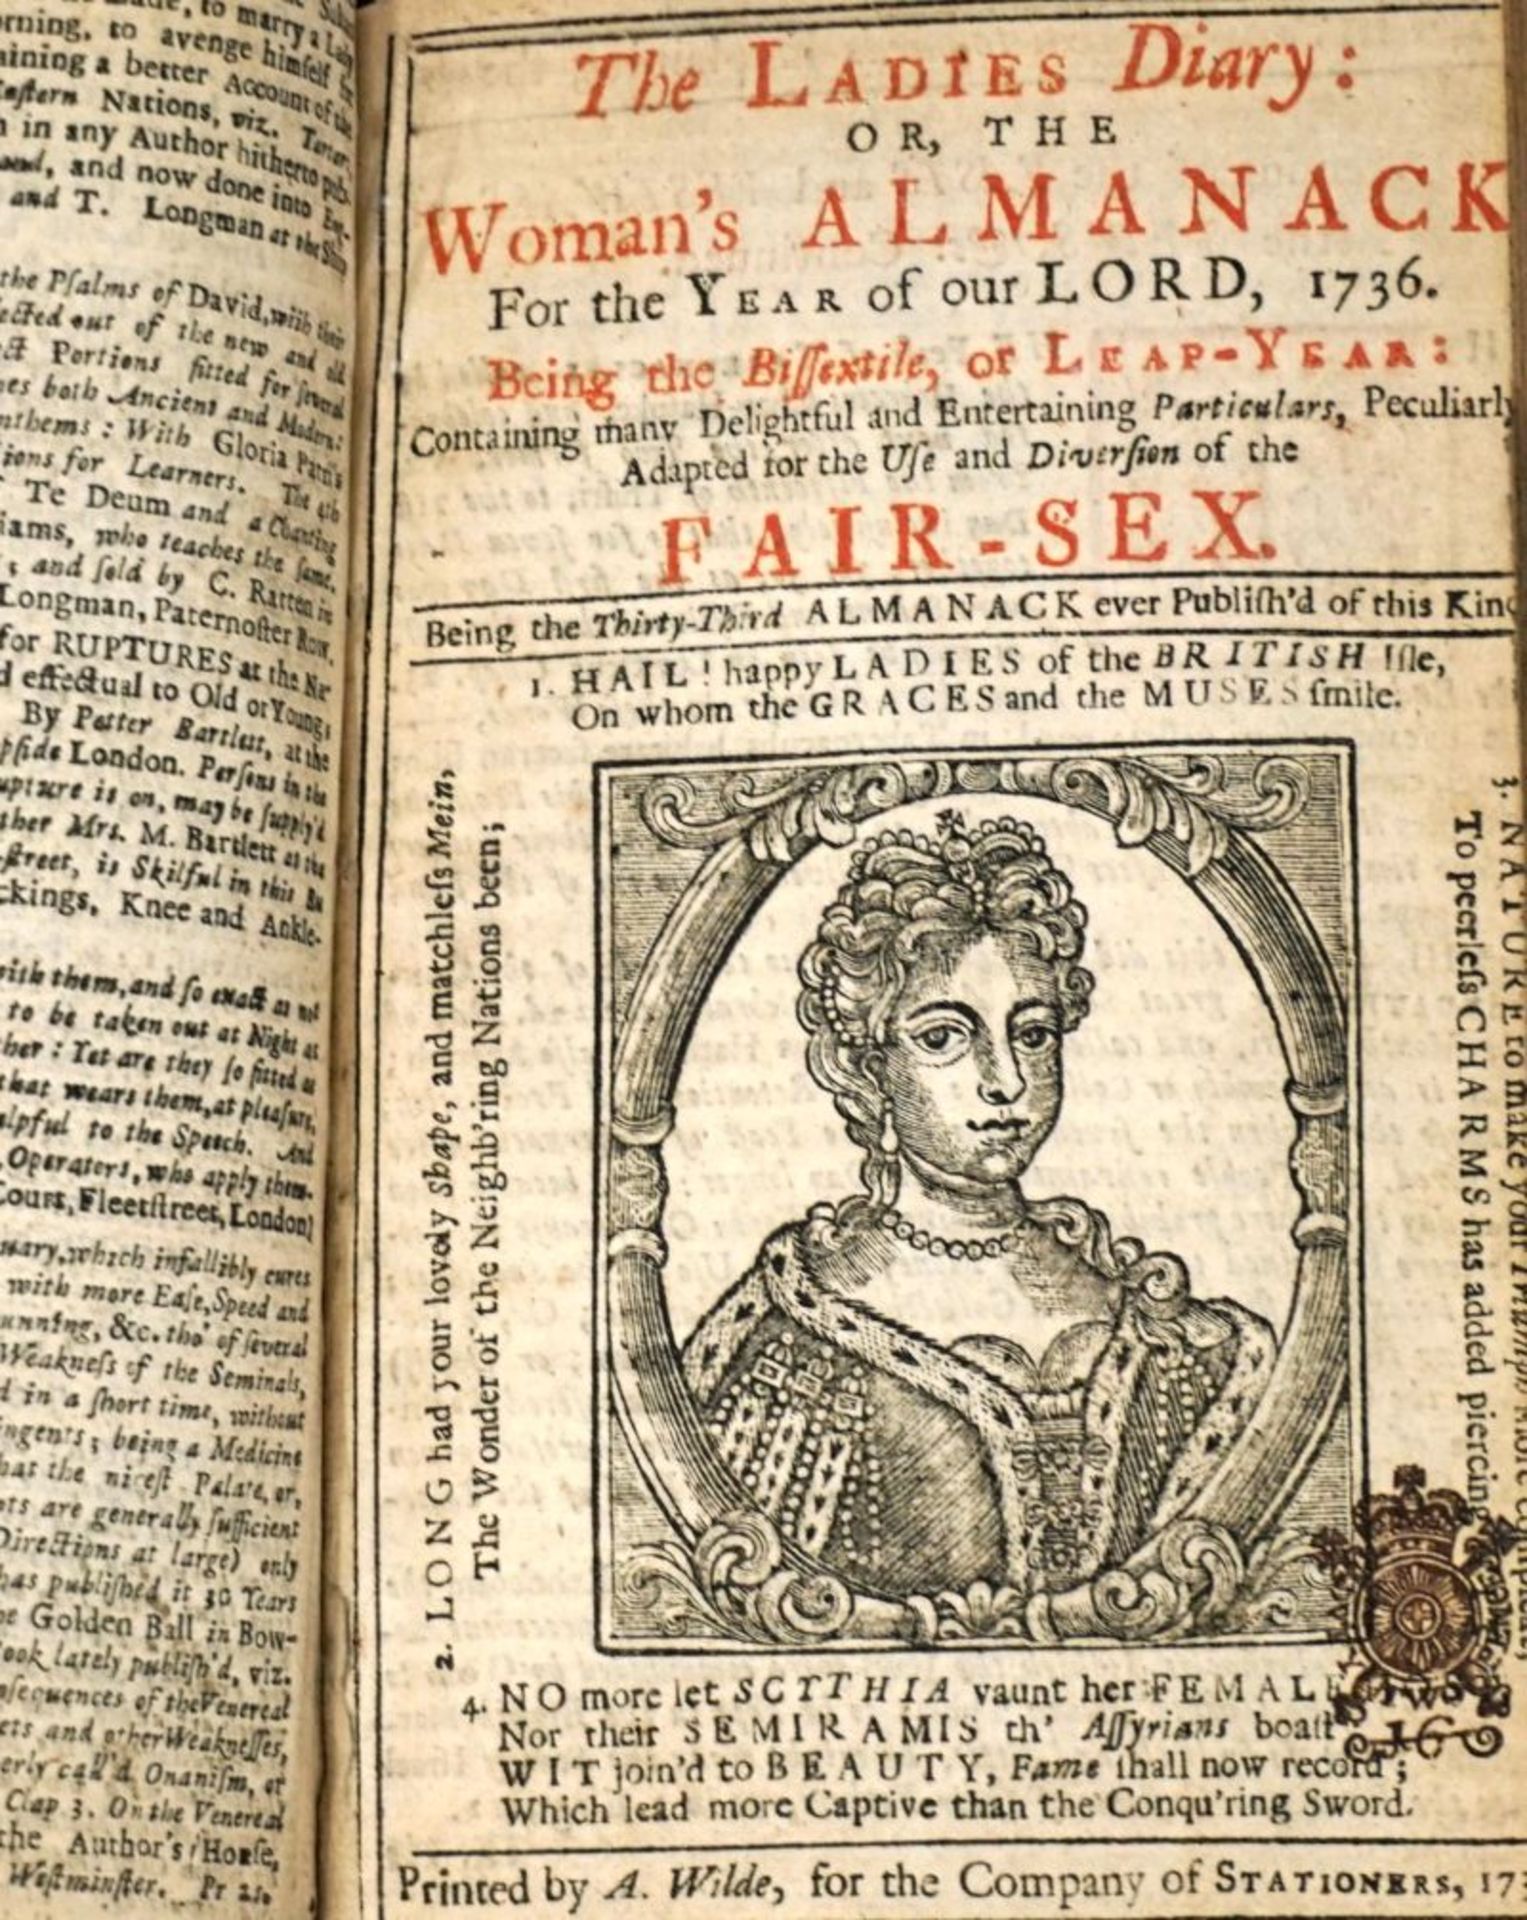 Ladies Diary, The: The Ladies Diary: or, the Woman’s Almanack